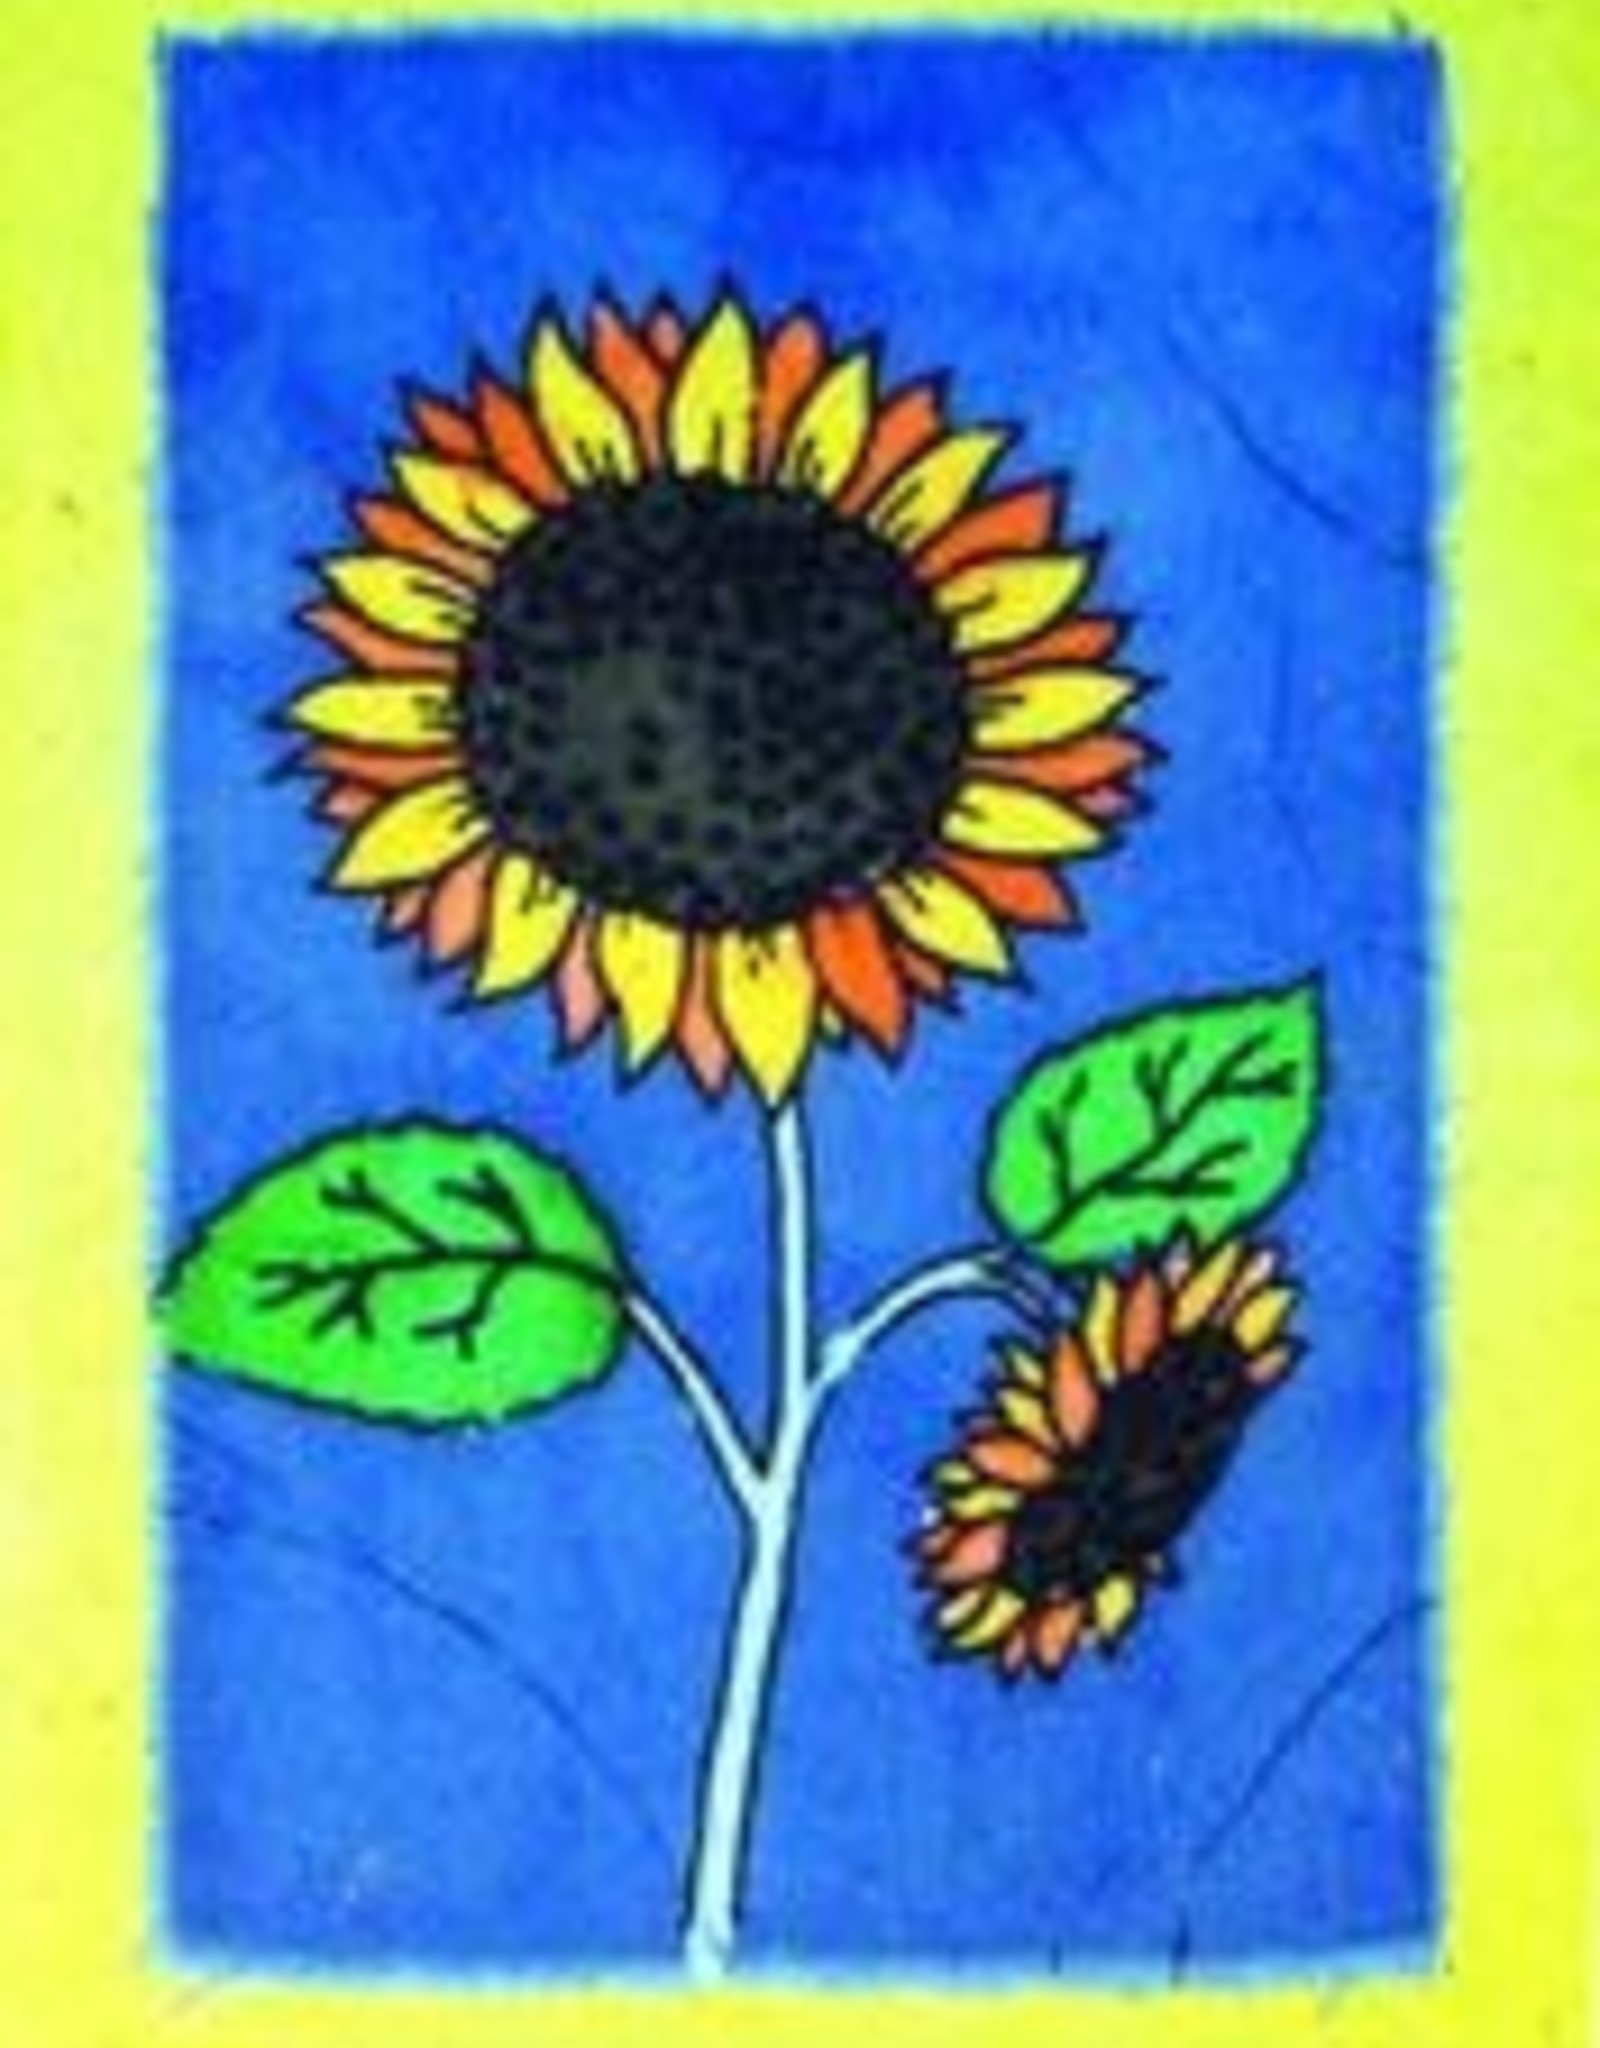 Nepal Card Sunflower Batik - Nepal